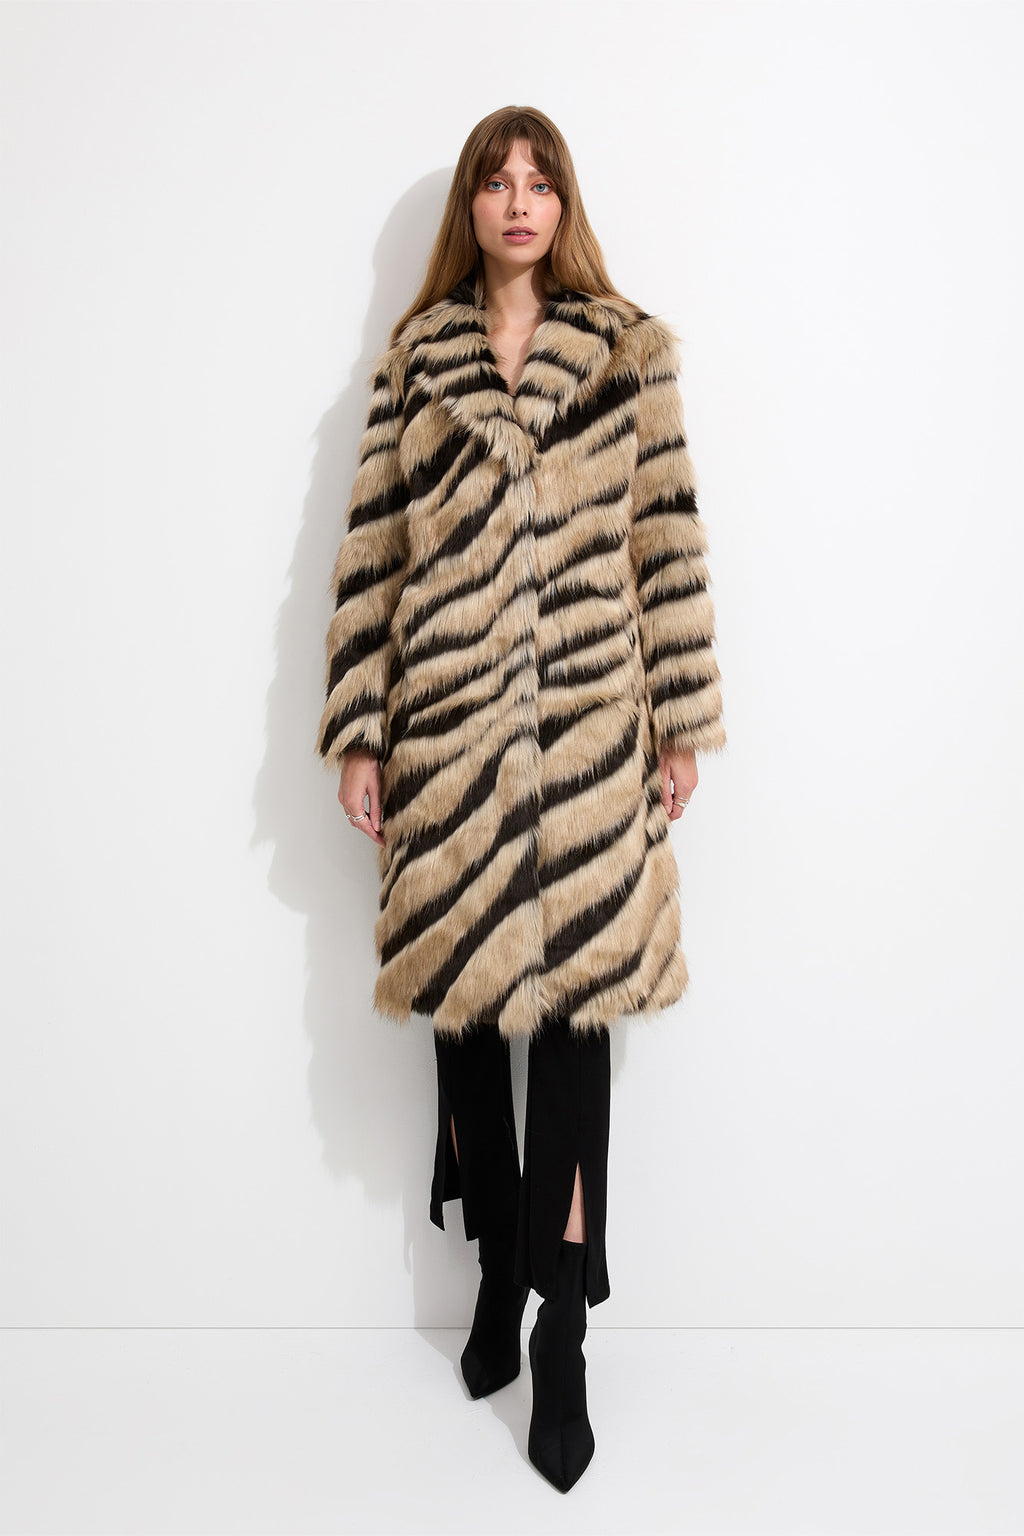 Faux Fur Clothing & Vegan Winter Outerwear | Unreal Fur